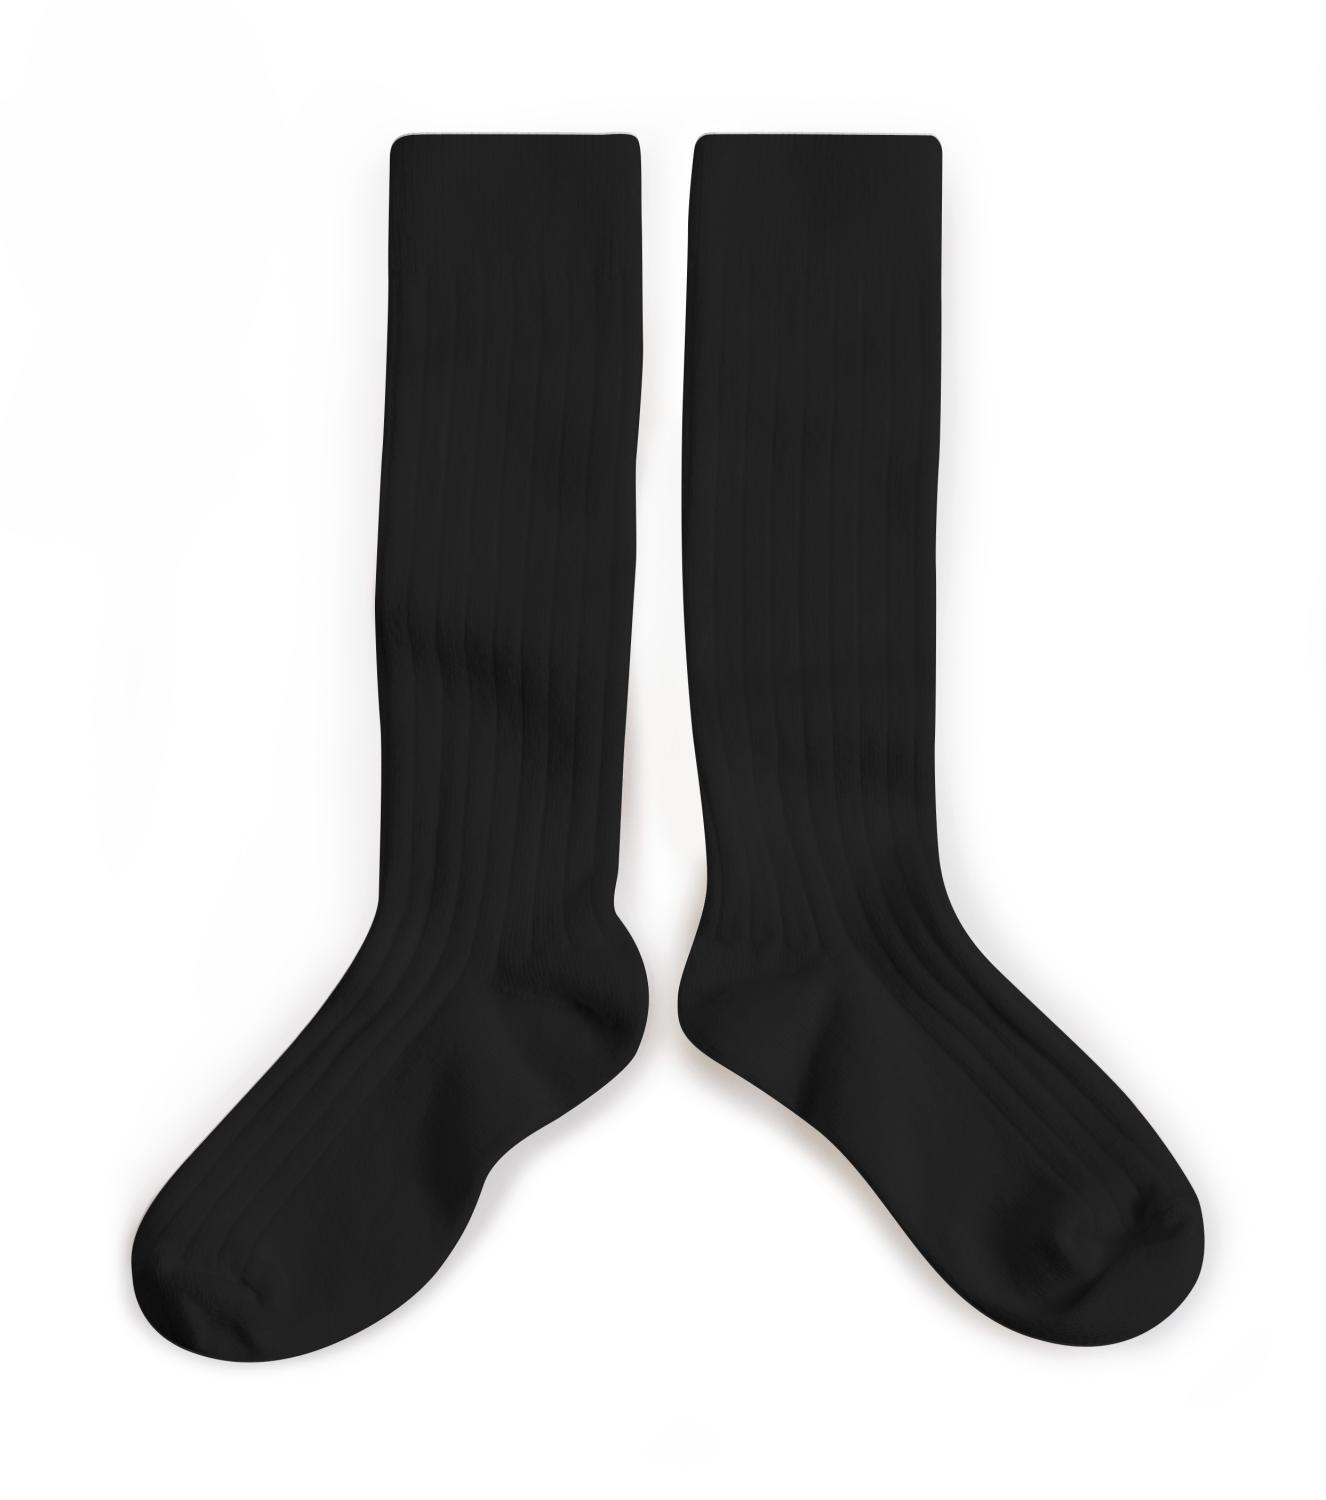 Little collegien accessories 18/20 ribbed knee high socks in noir charbon